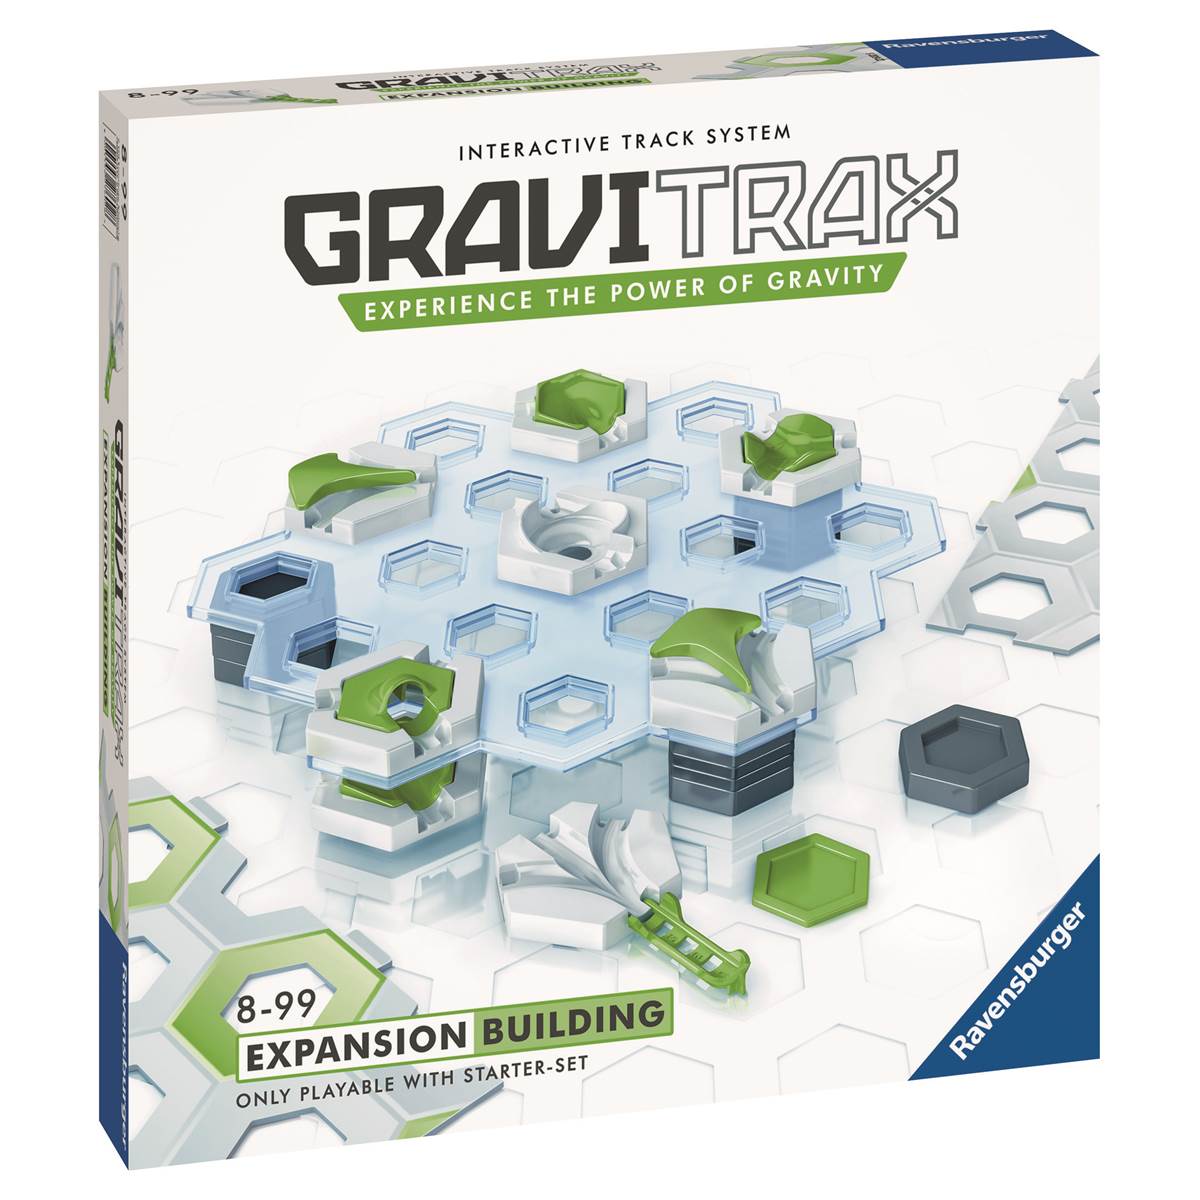 https://www.jeuxdukdor.fr/wp-content/uploads/2022/01/GRAVITRAX-Extension-Building-box.jpg